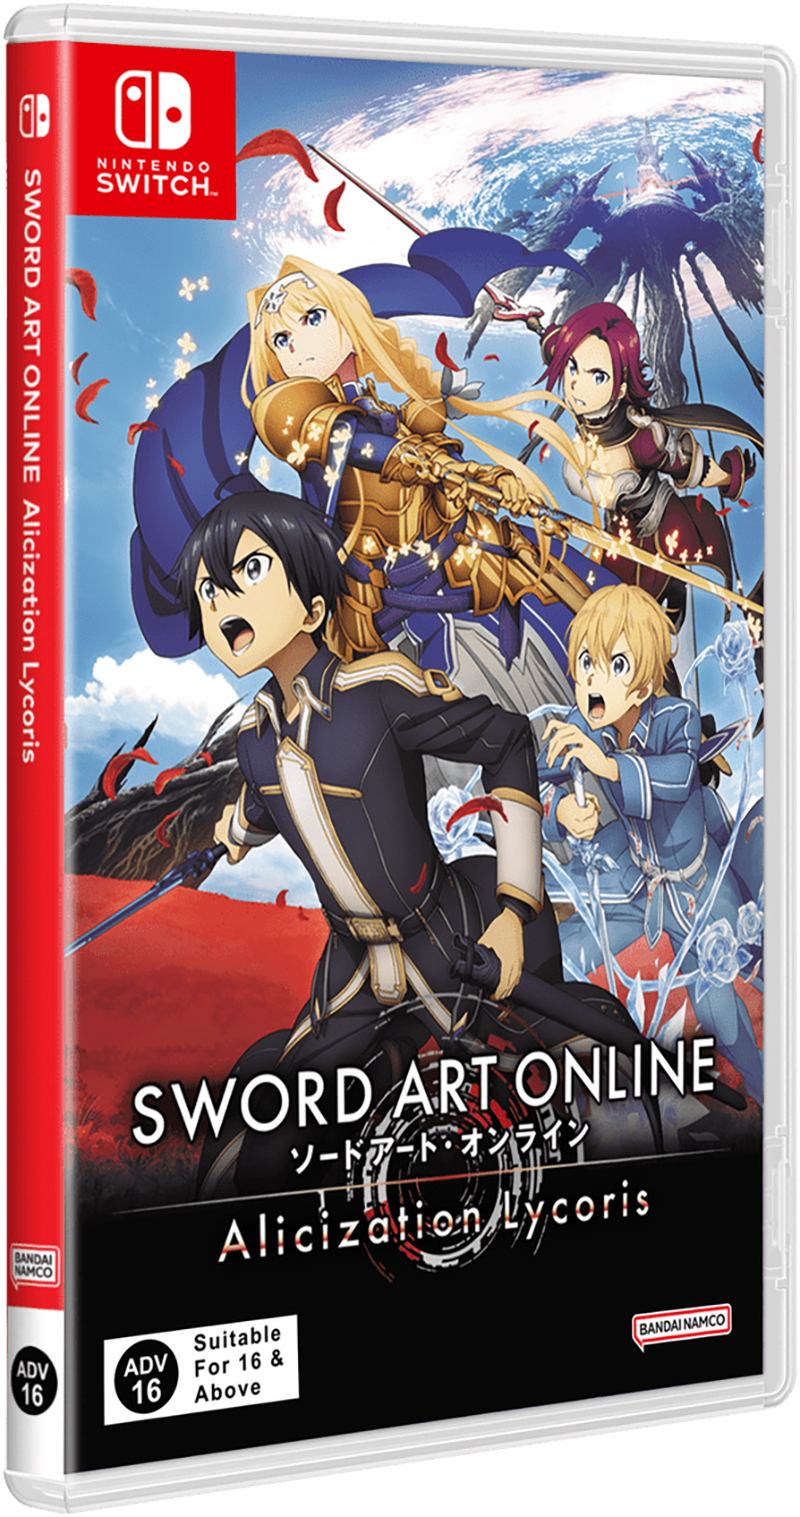 Sword Art Online: Alicization Lycoris Review